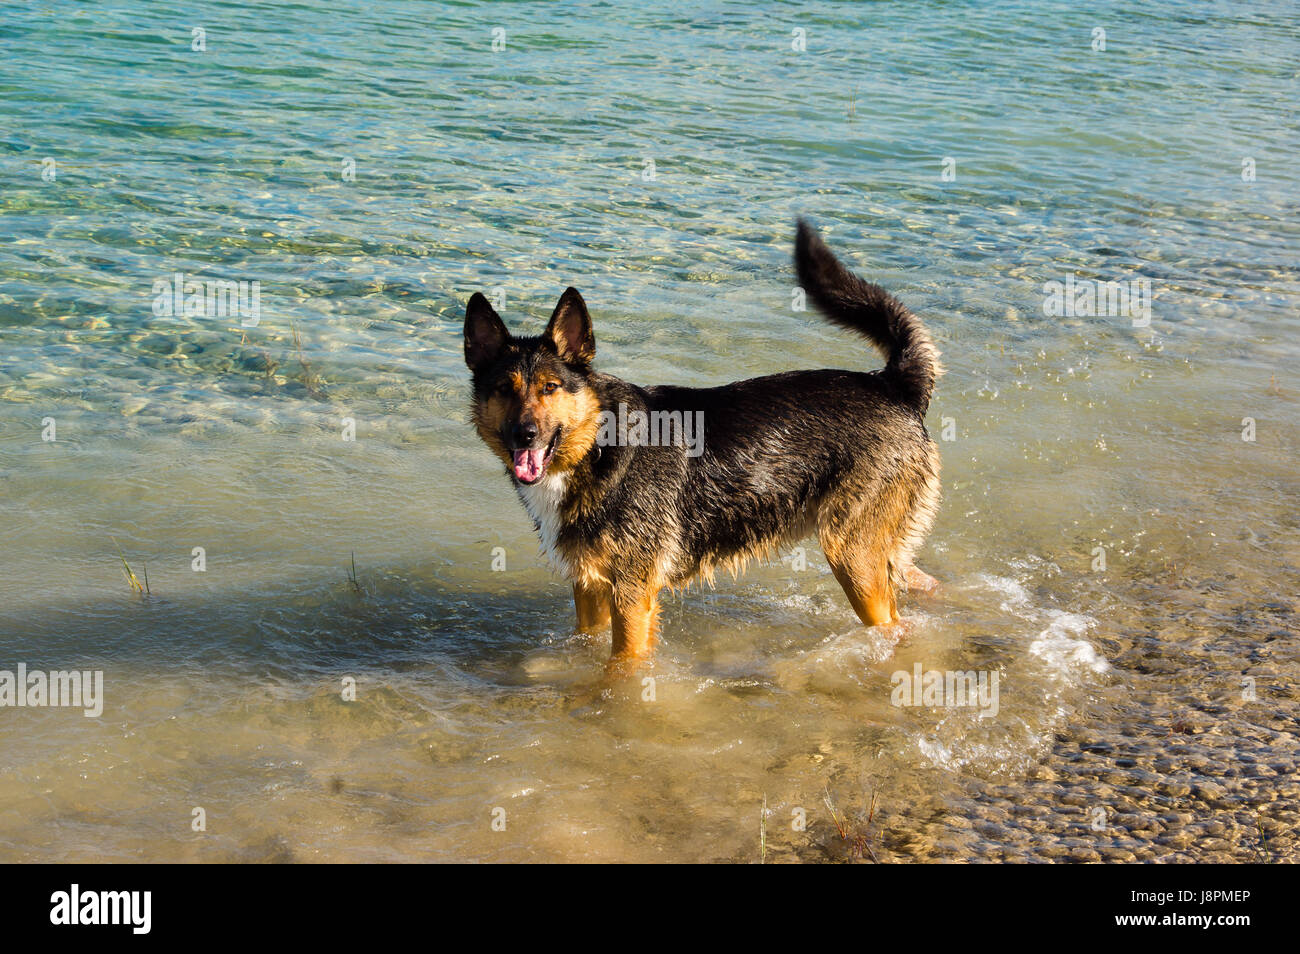 german shepherd bathes in water Stock Photo